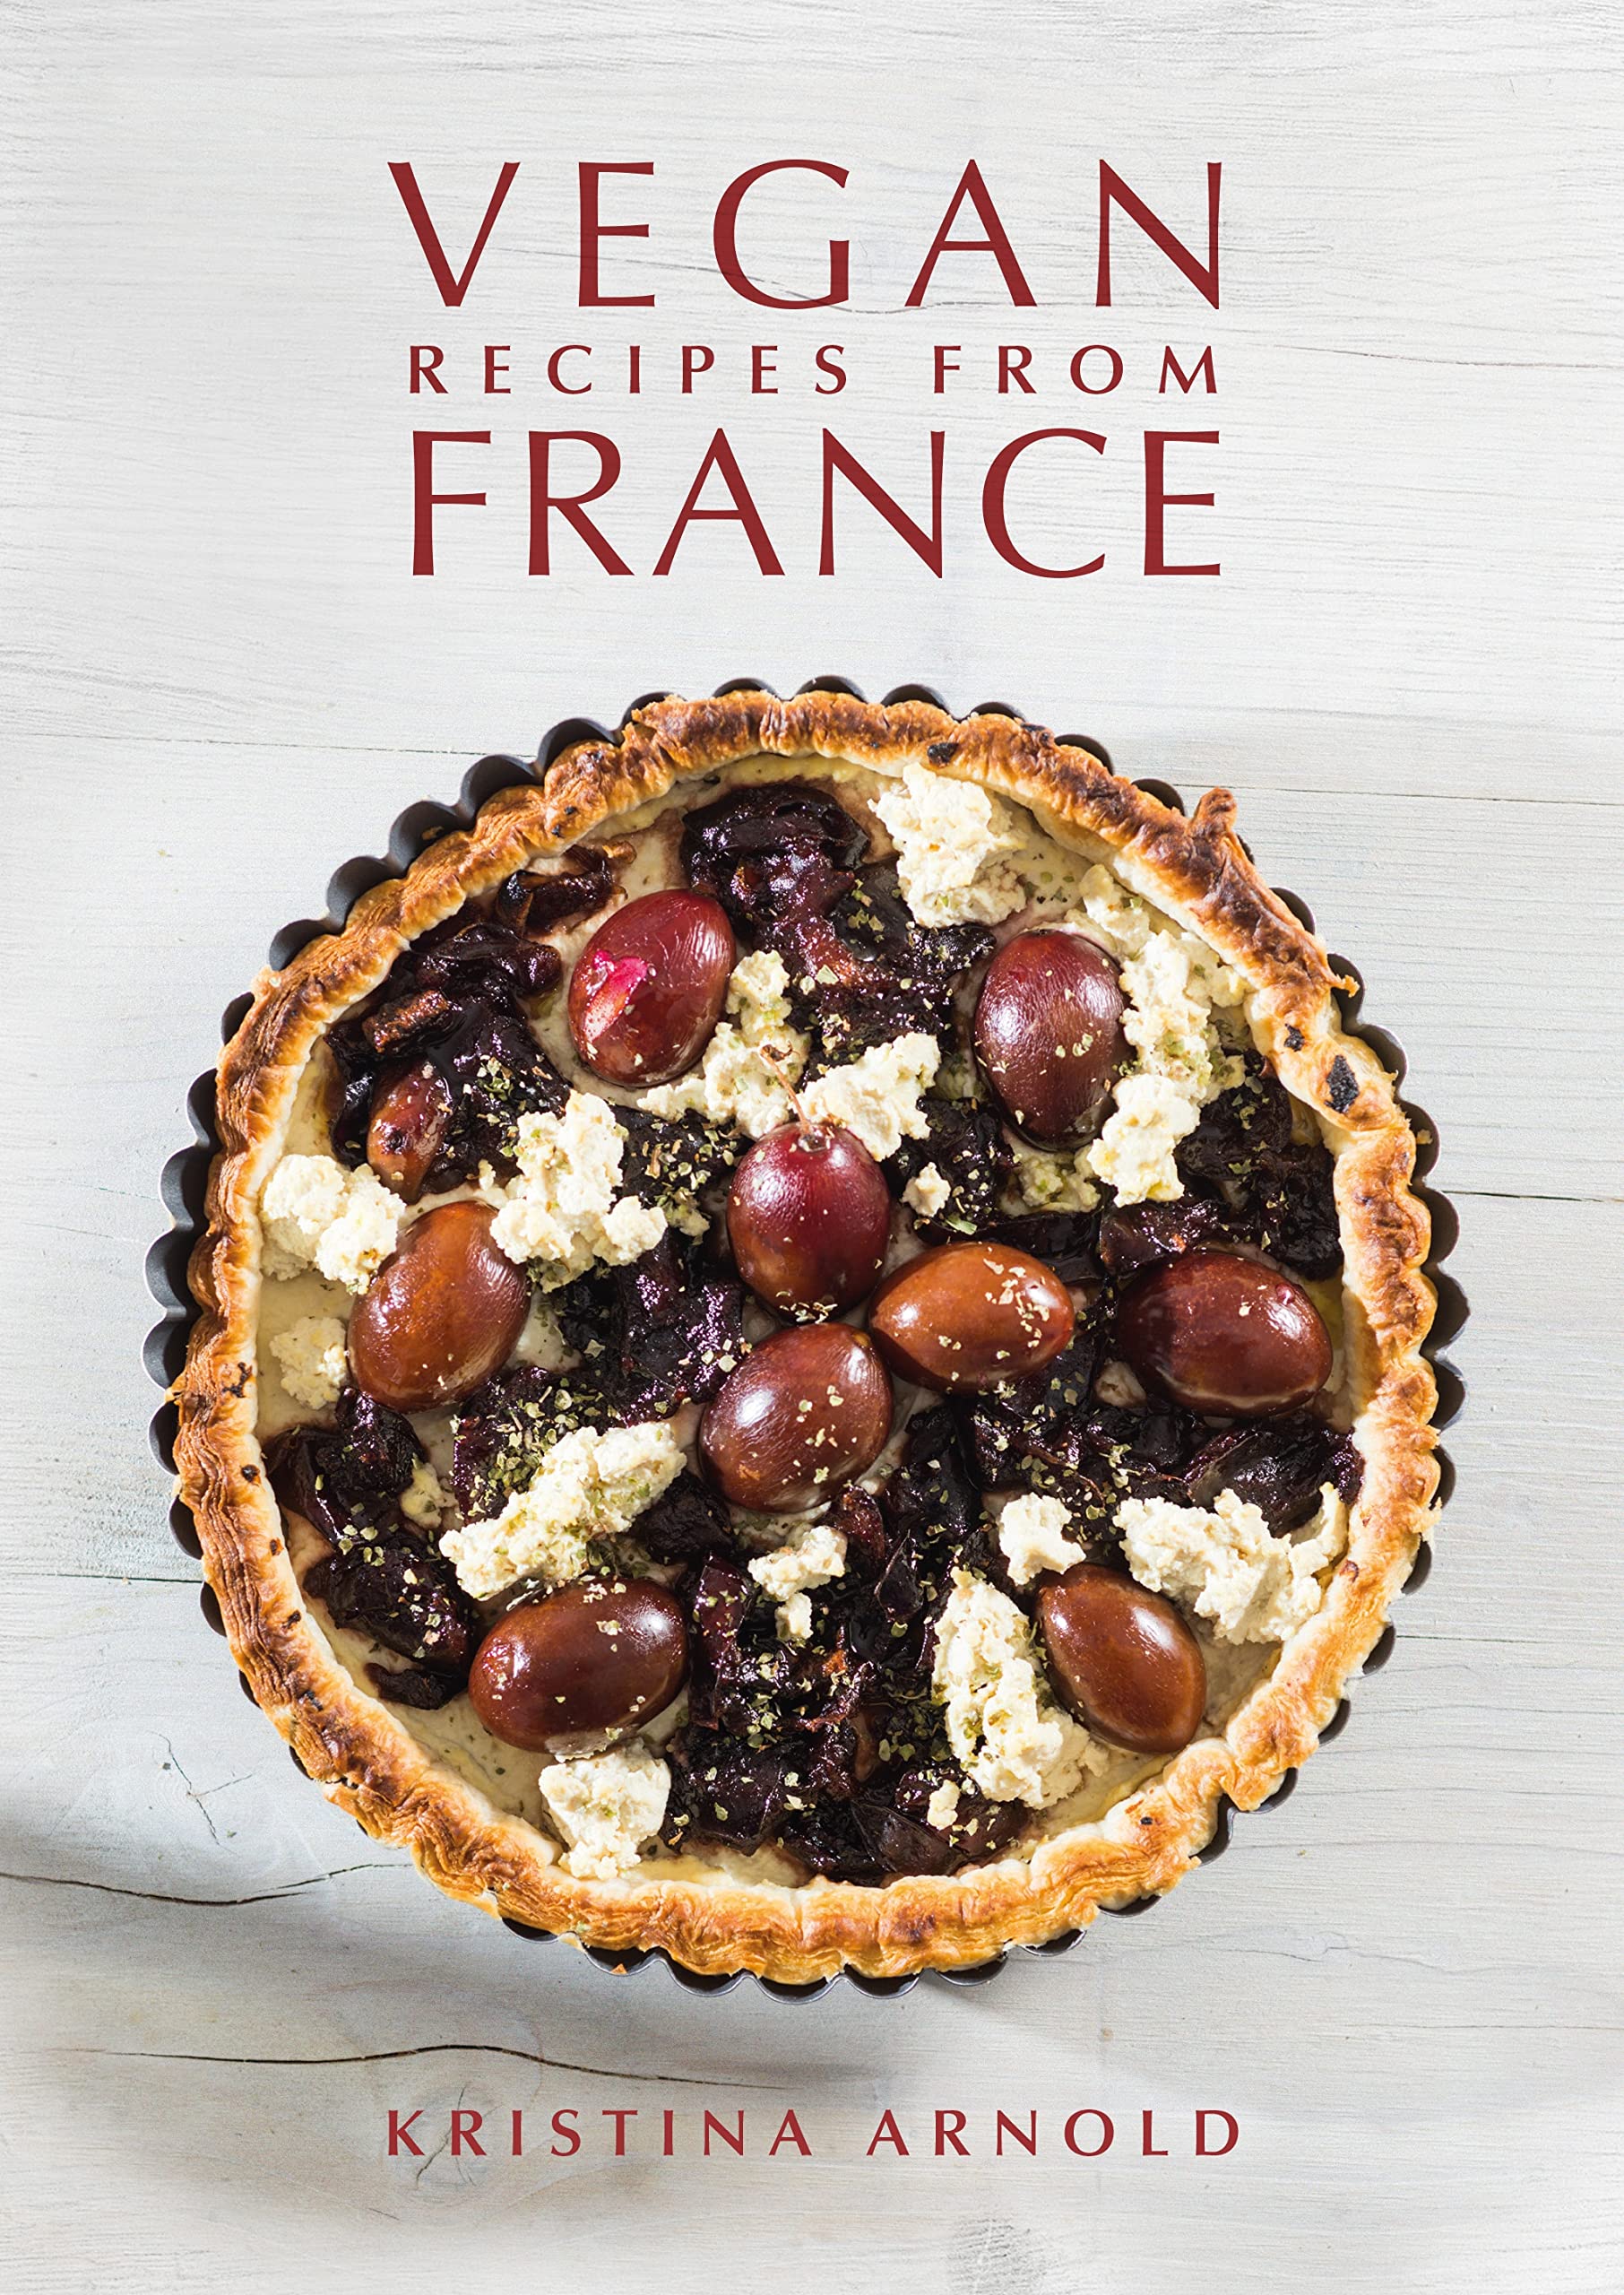 Vegan Recipes from France (Kristina Arnold)